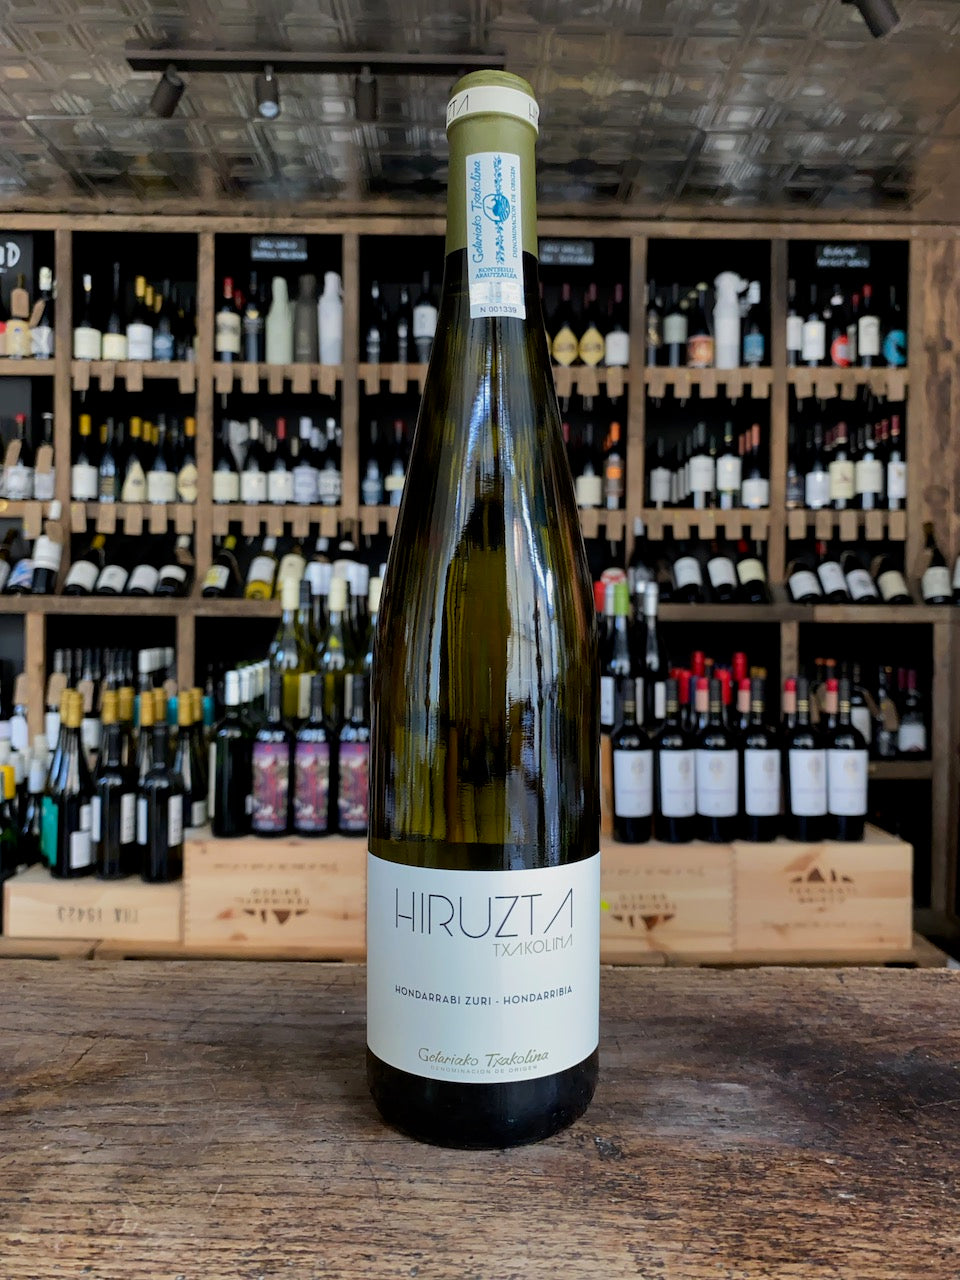 Txakoli, Hiruzta Winery, 2021